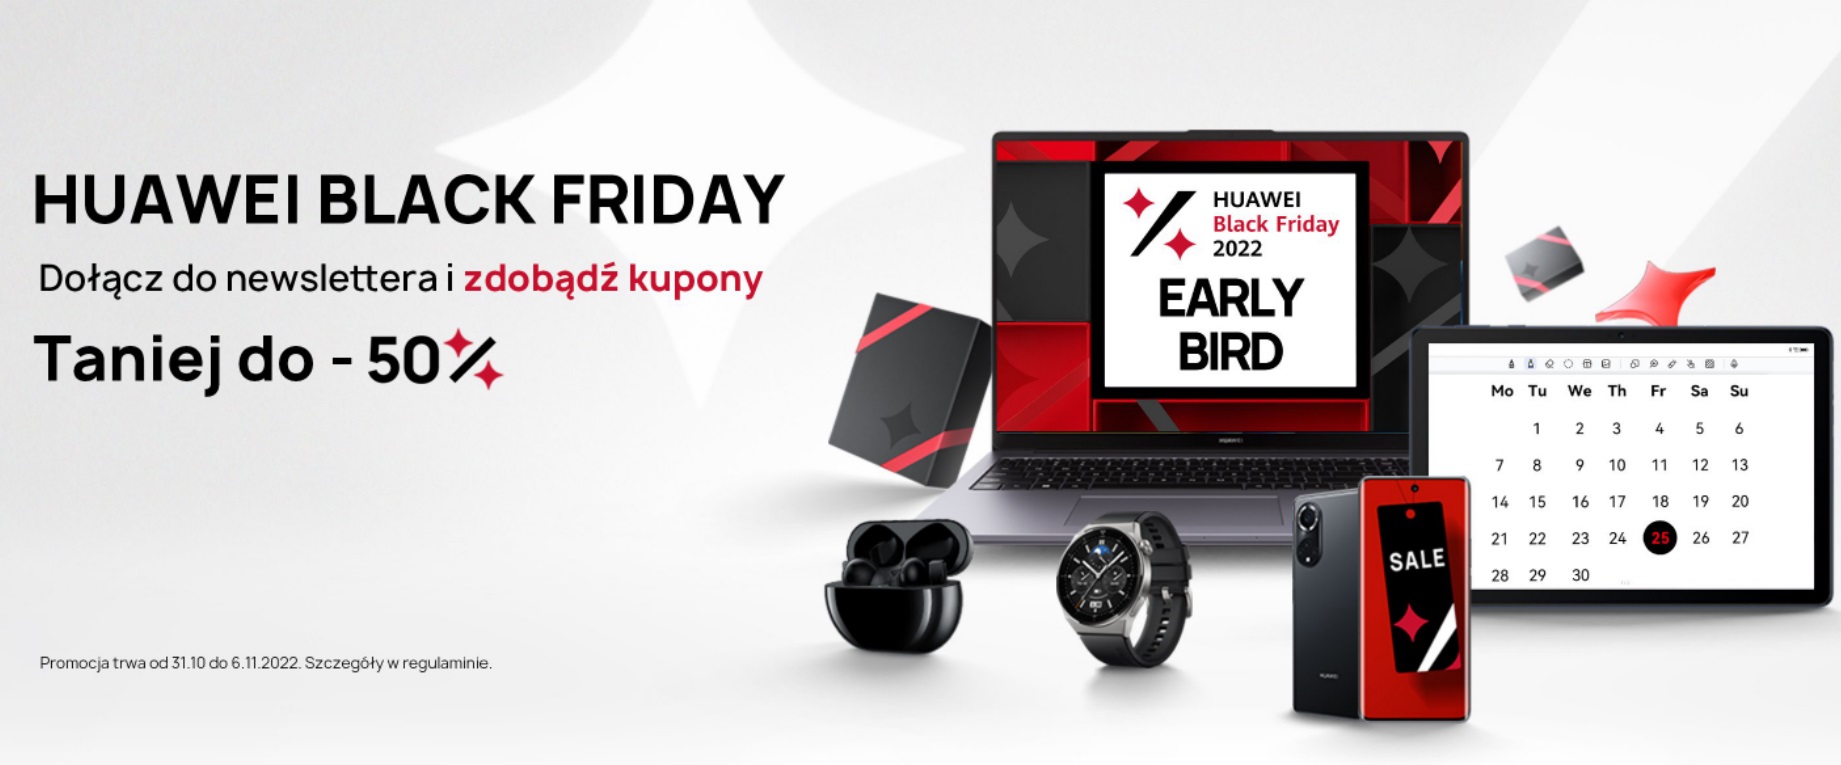 Huawei promocja Black Friday Early Bird 2022